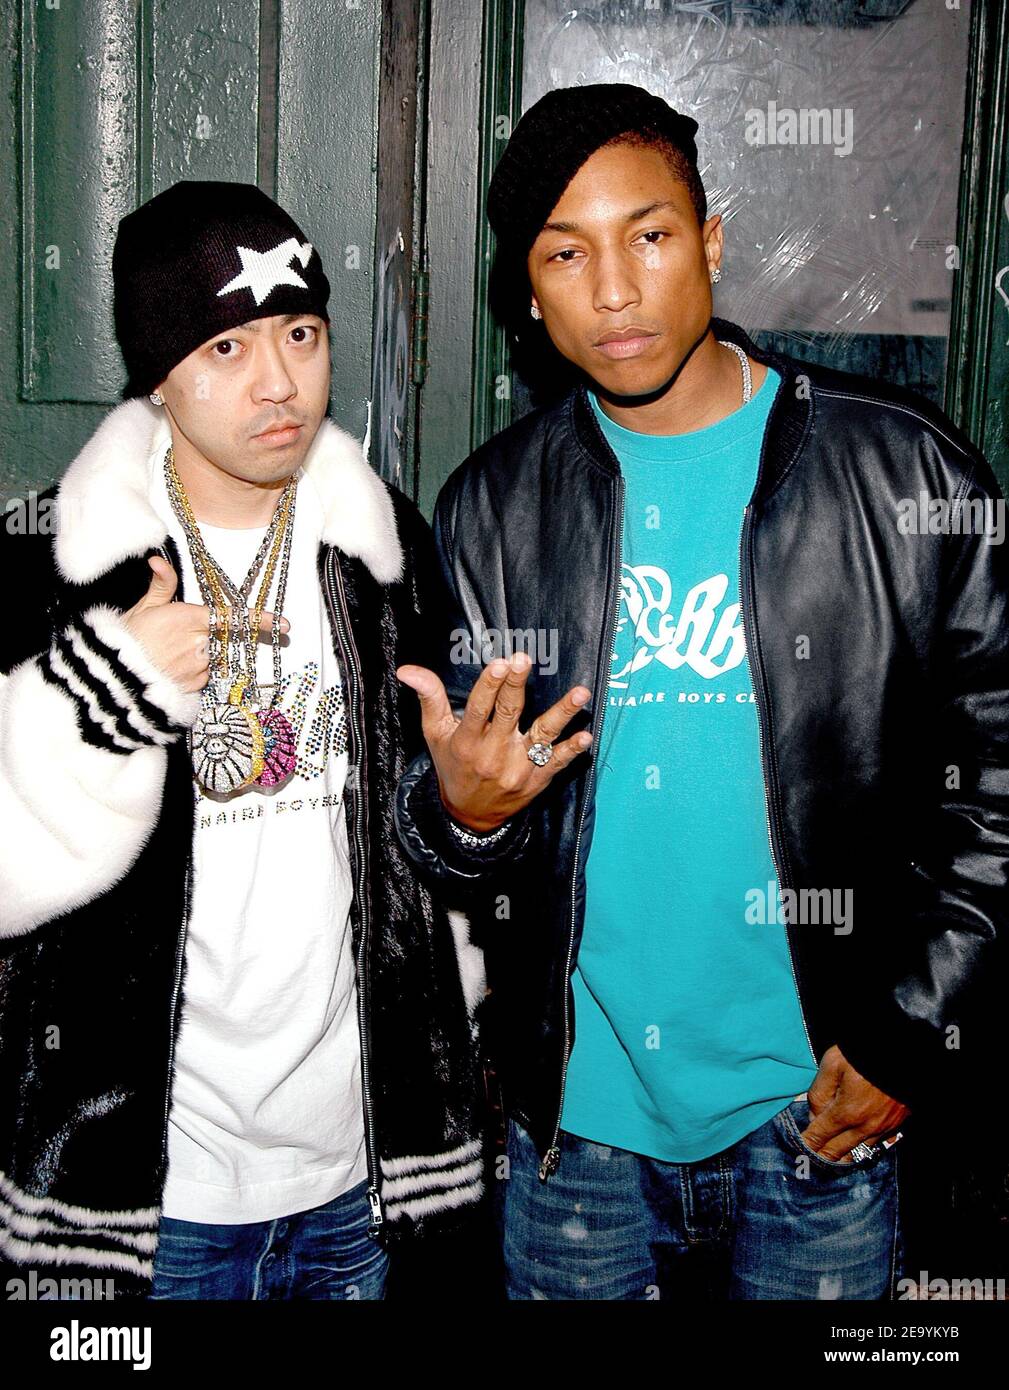 image therapy — Nigo & Pharrell At The Tokyo MTV Music Awards